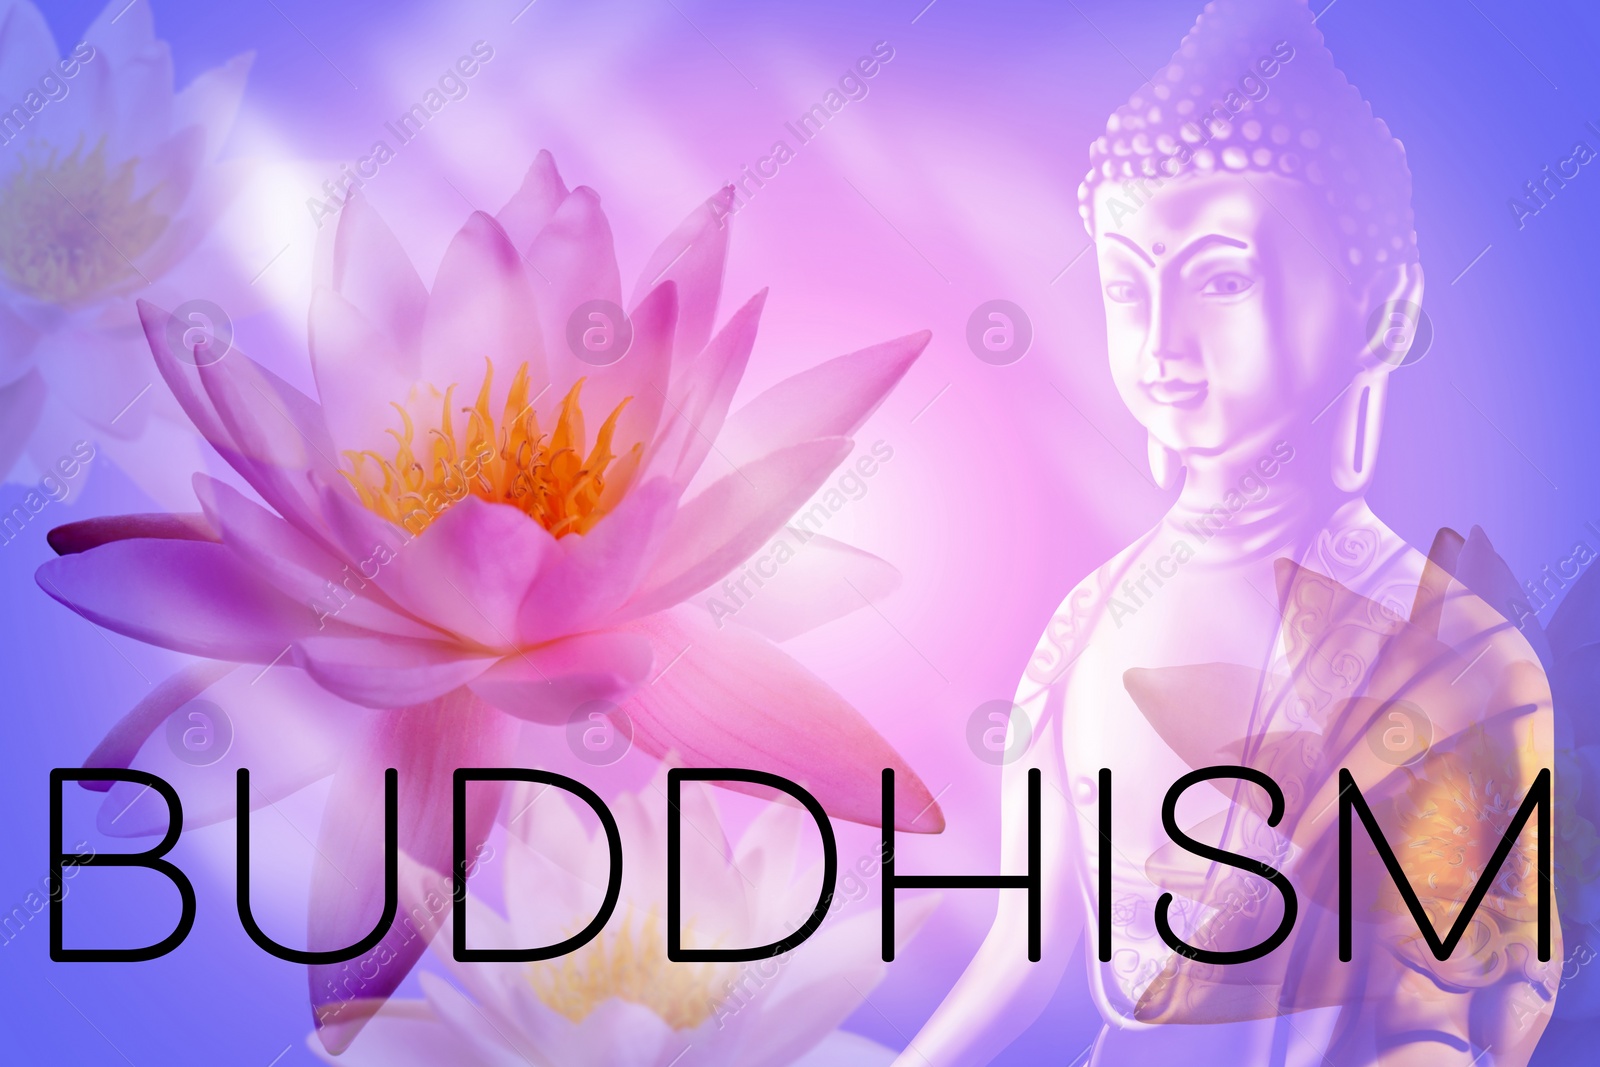 Image of Buddhism. Double exposure of lotus flowers and Buddha figure